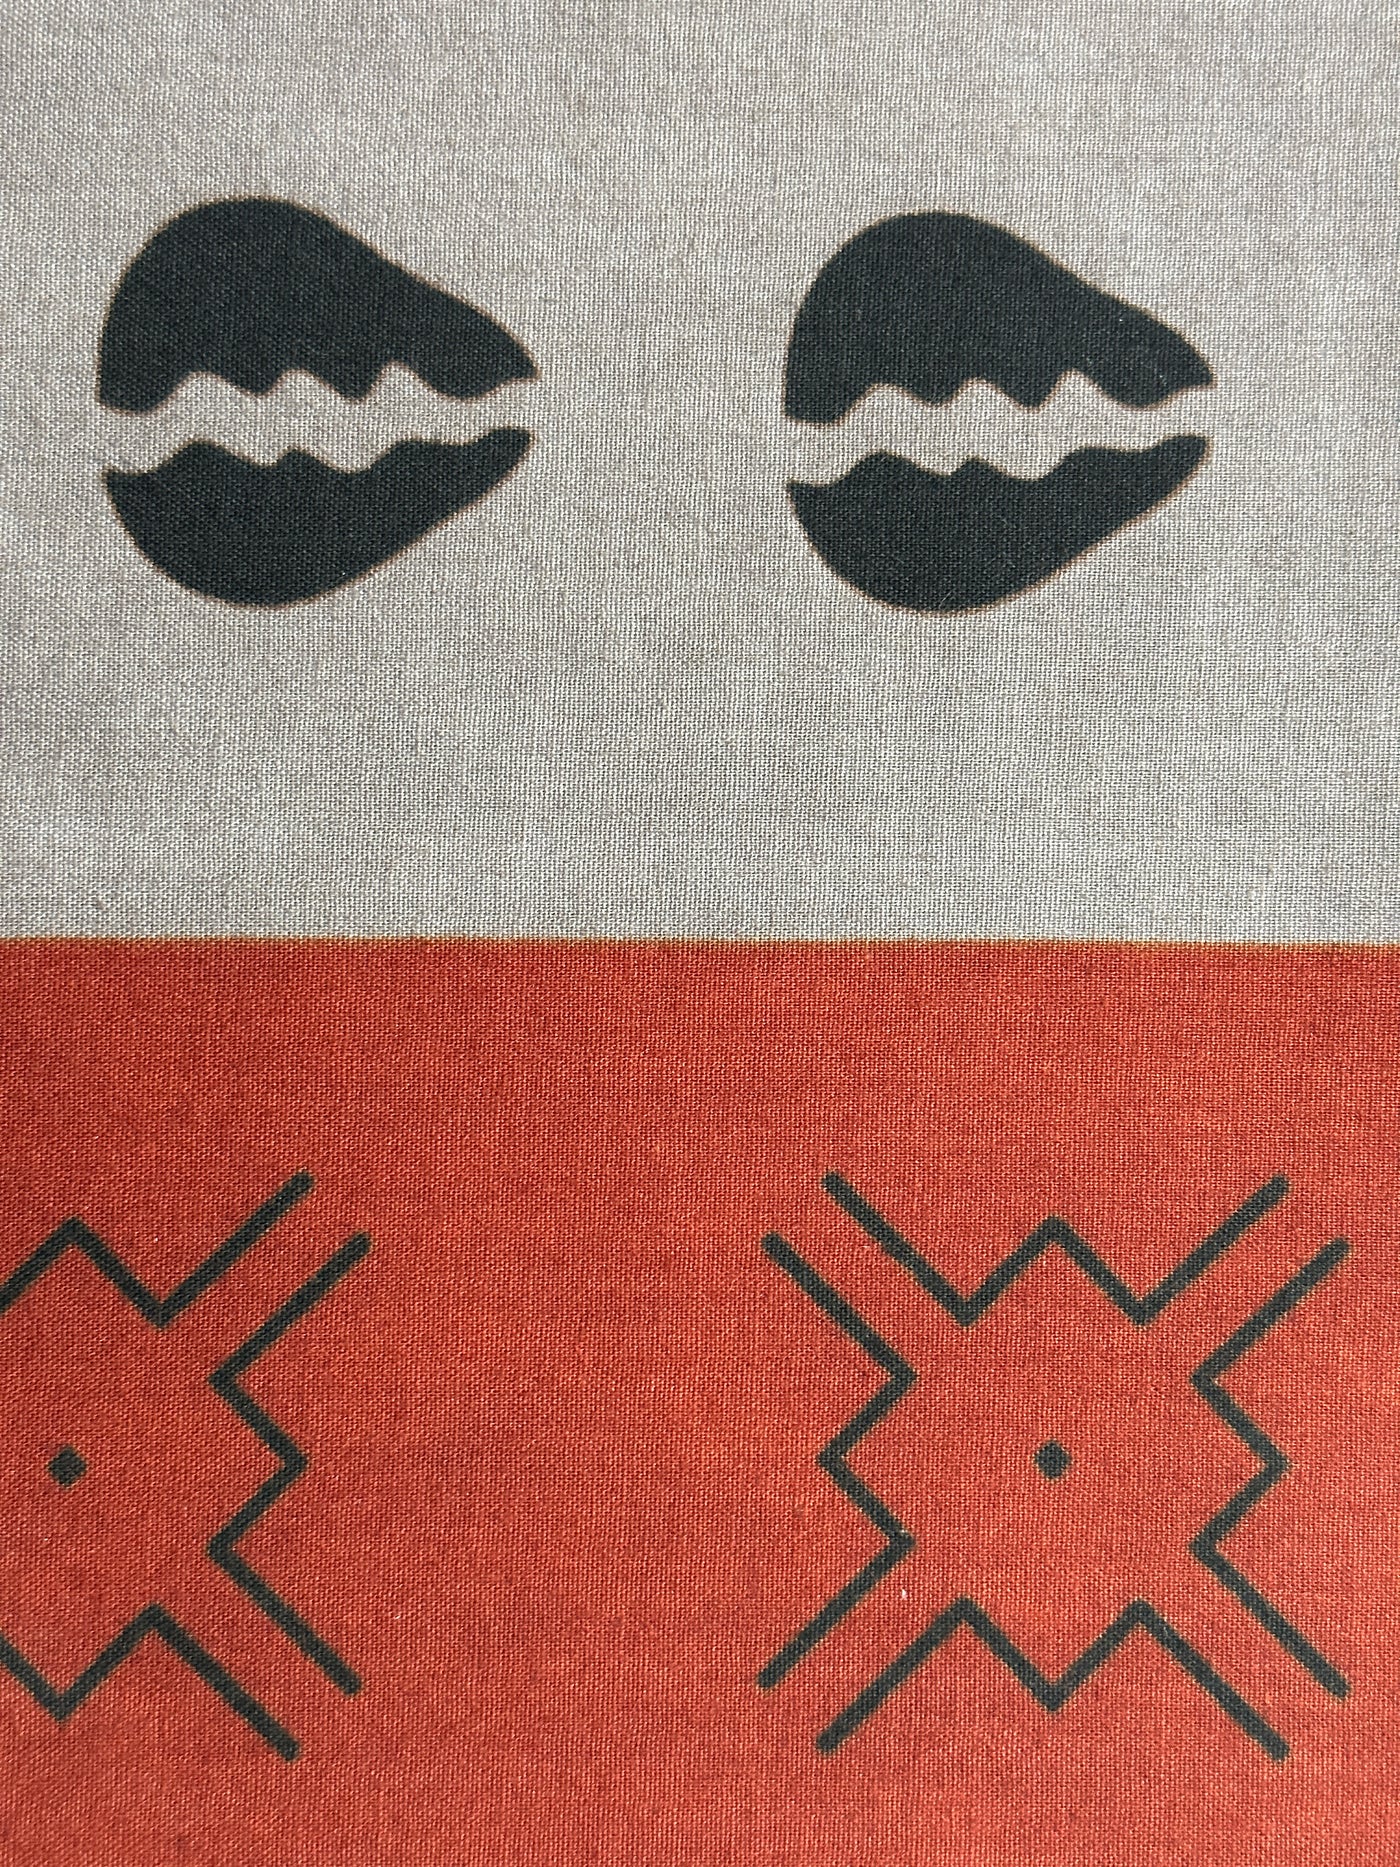 Tribal Fabric - 3067015